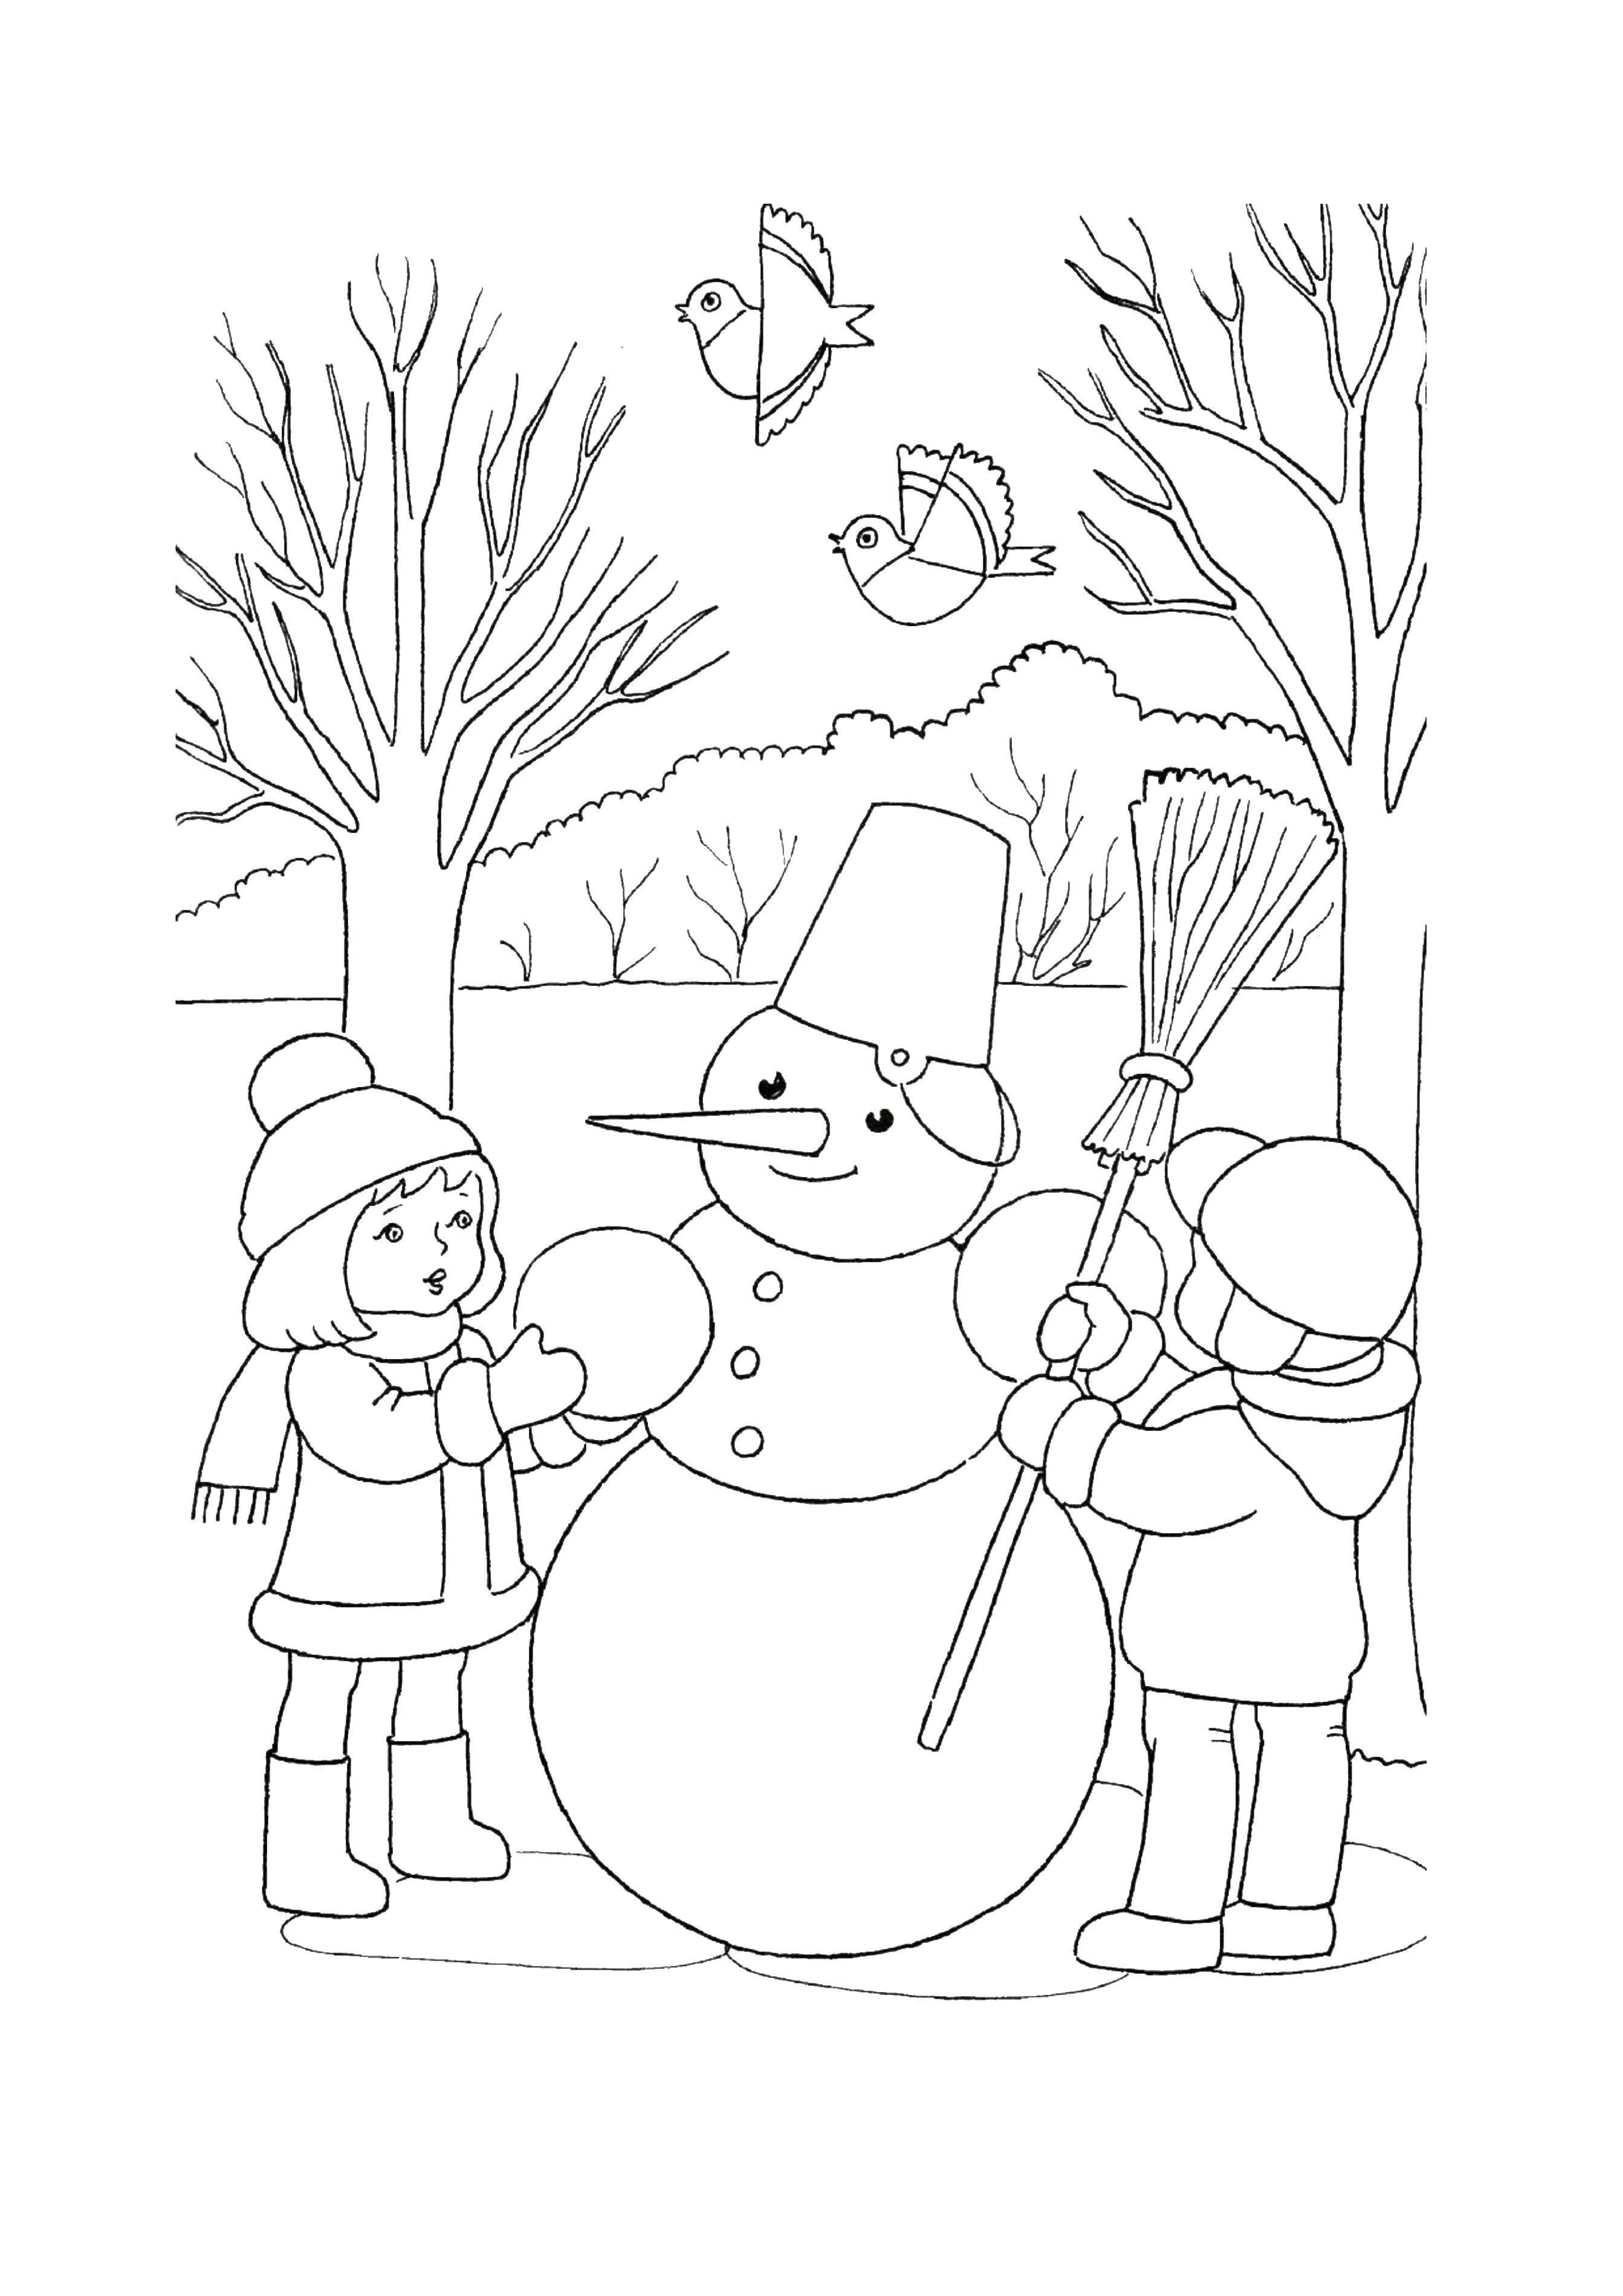  Дети лепят снеговика с метлой